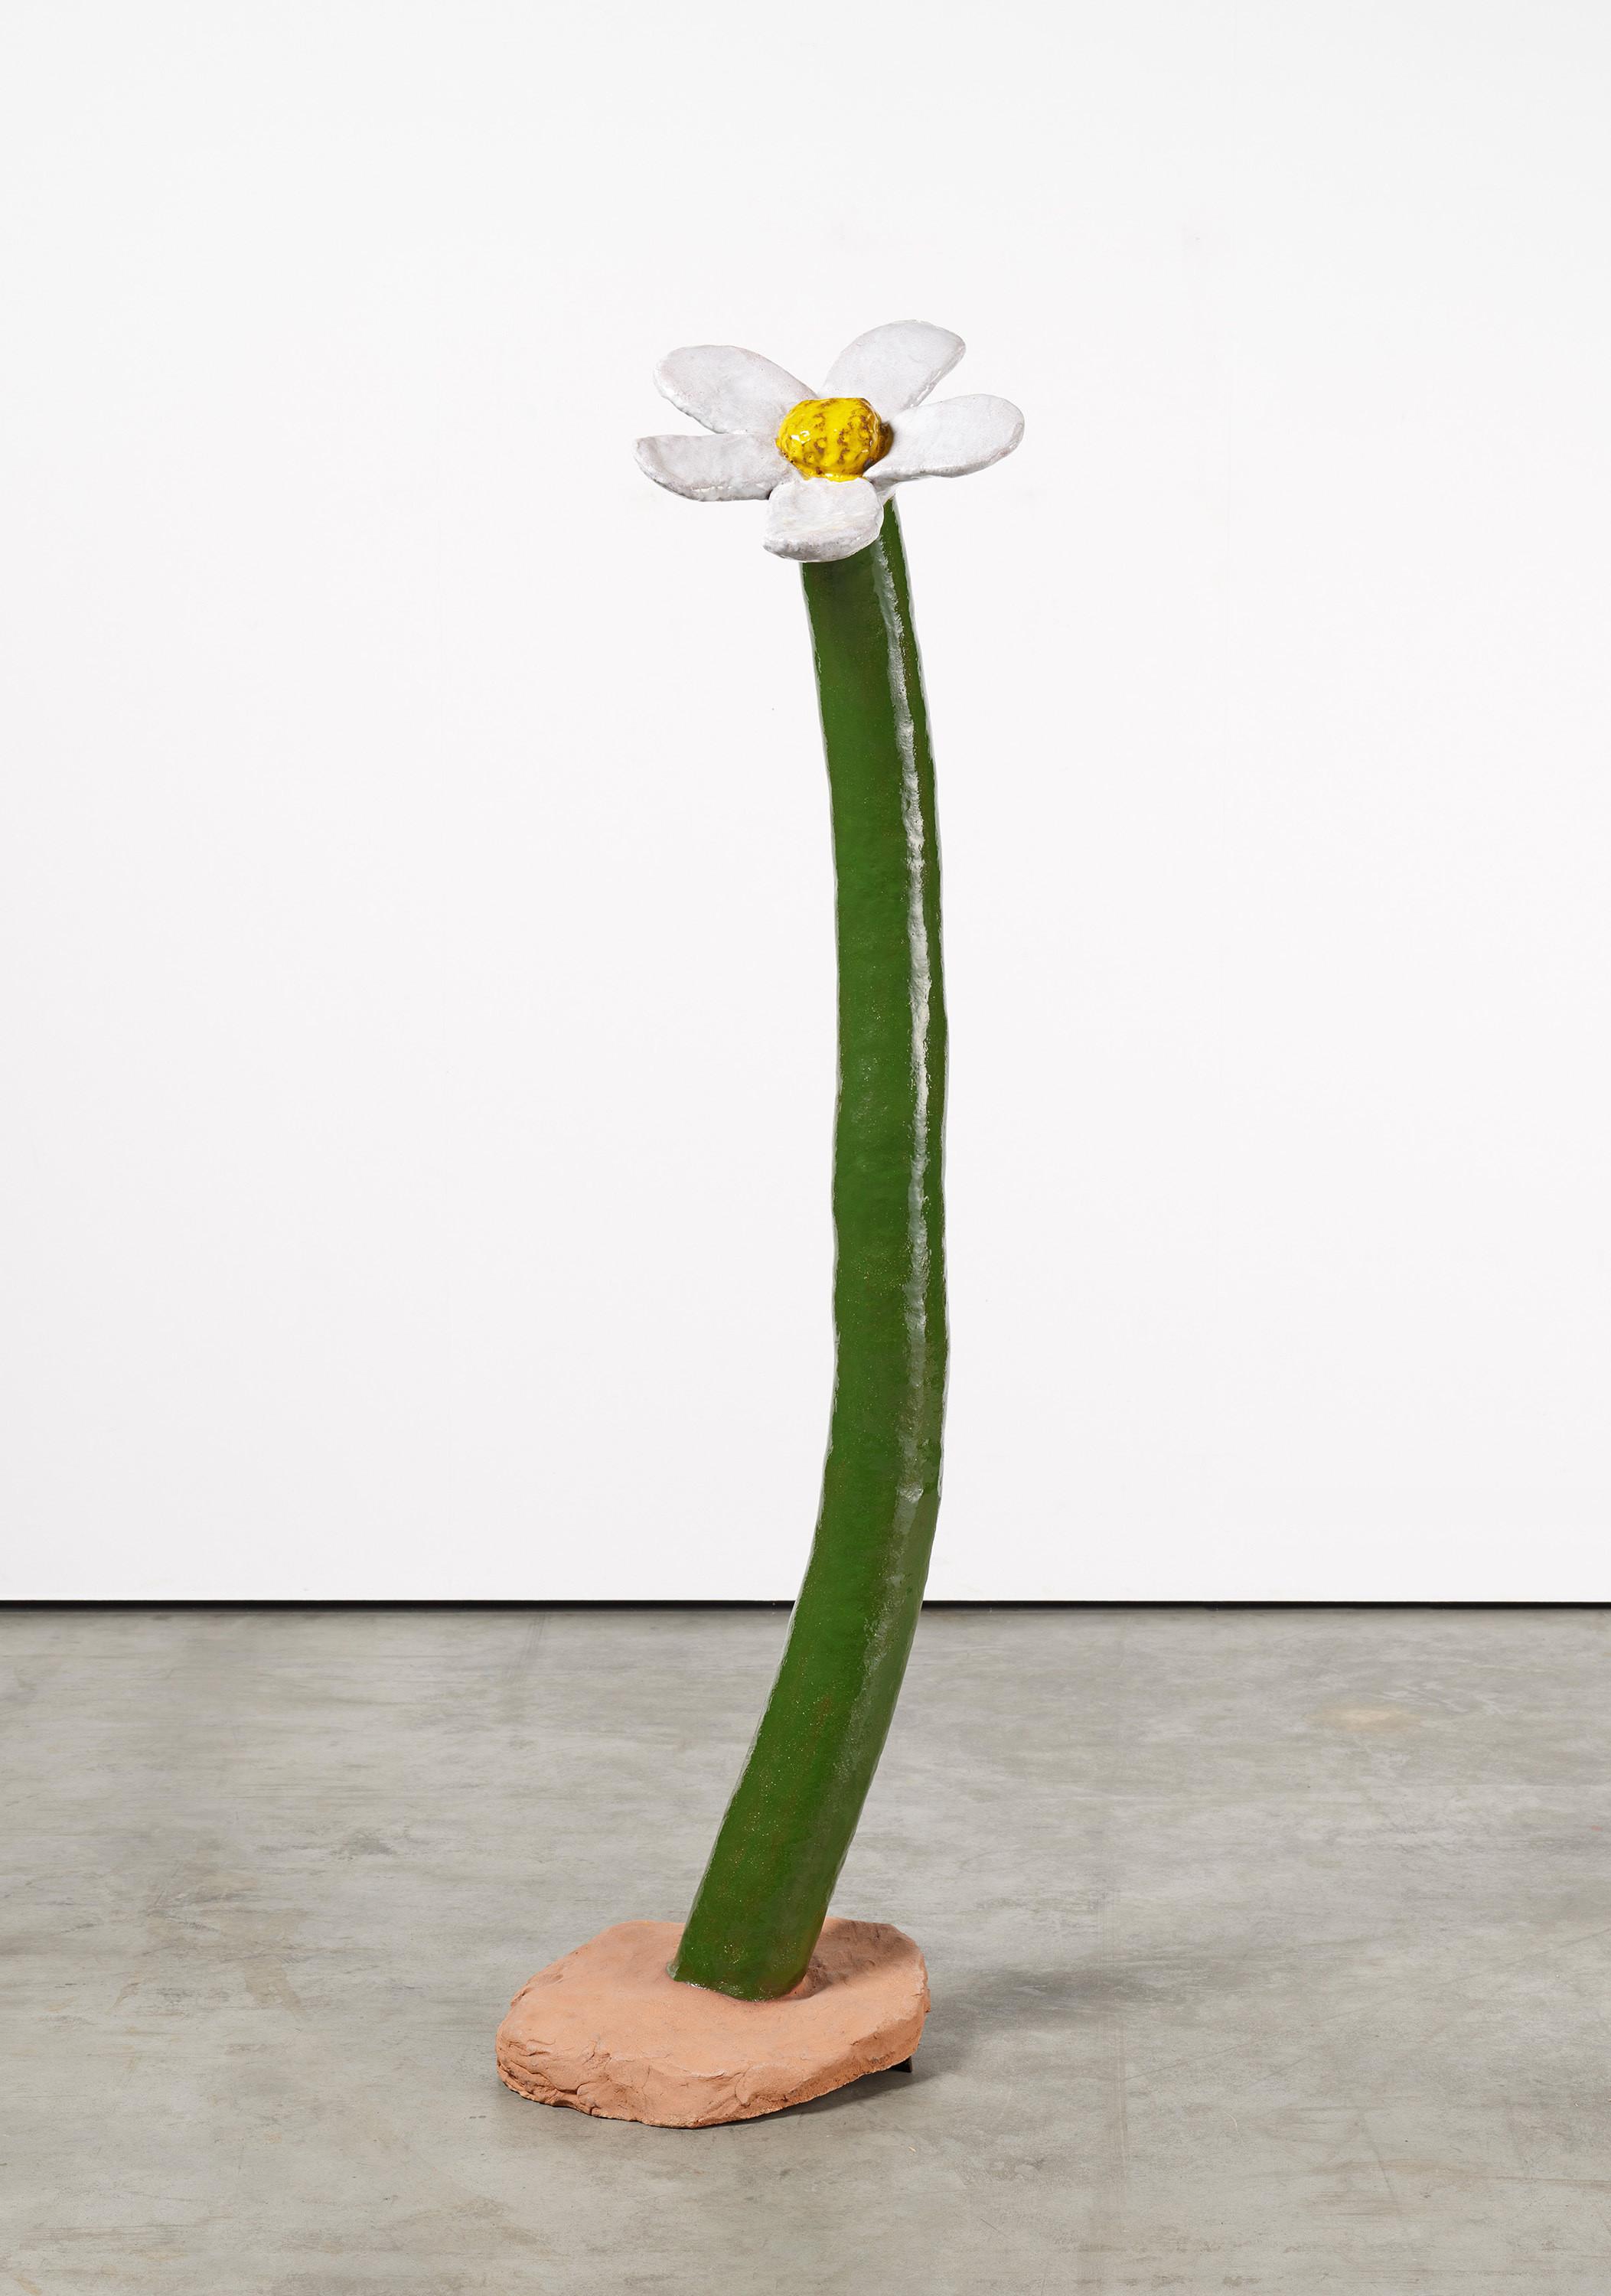 Große Blume. by Thomas Stimm